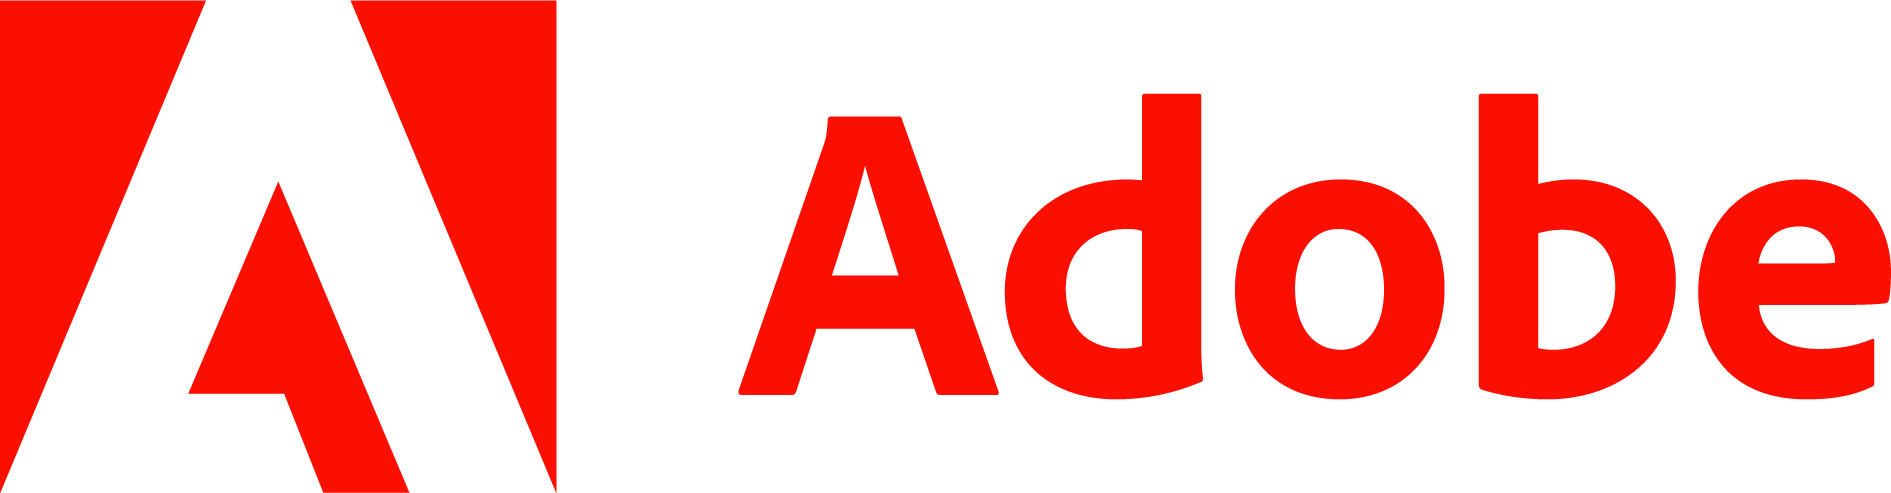 Adobe Inc logo